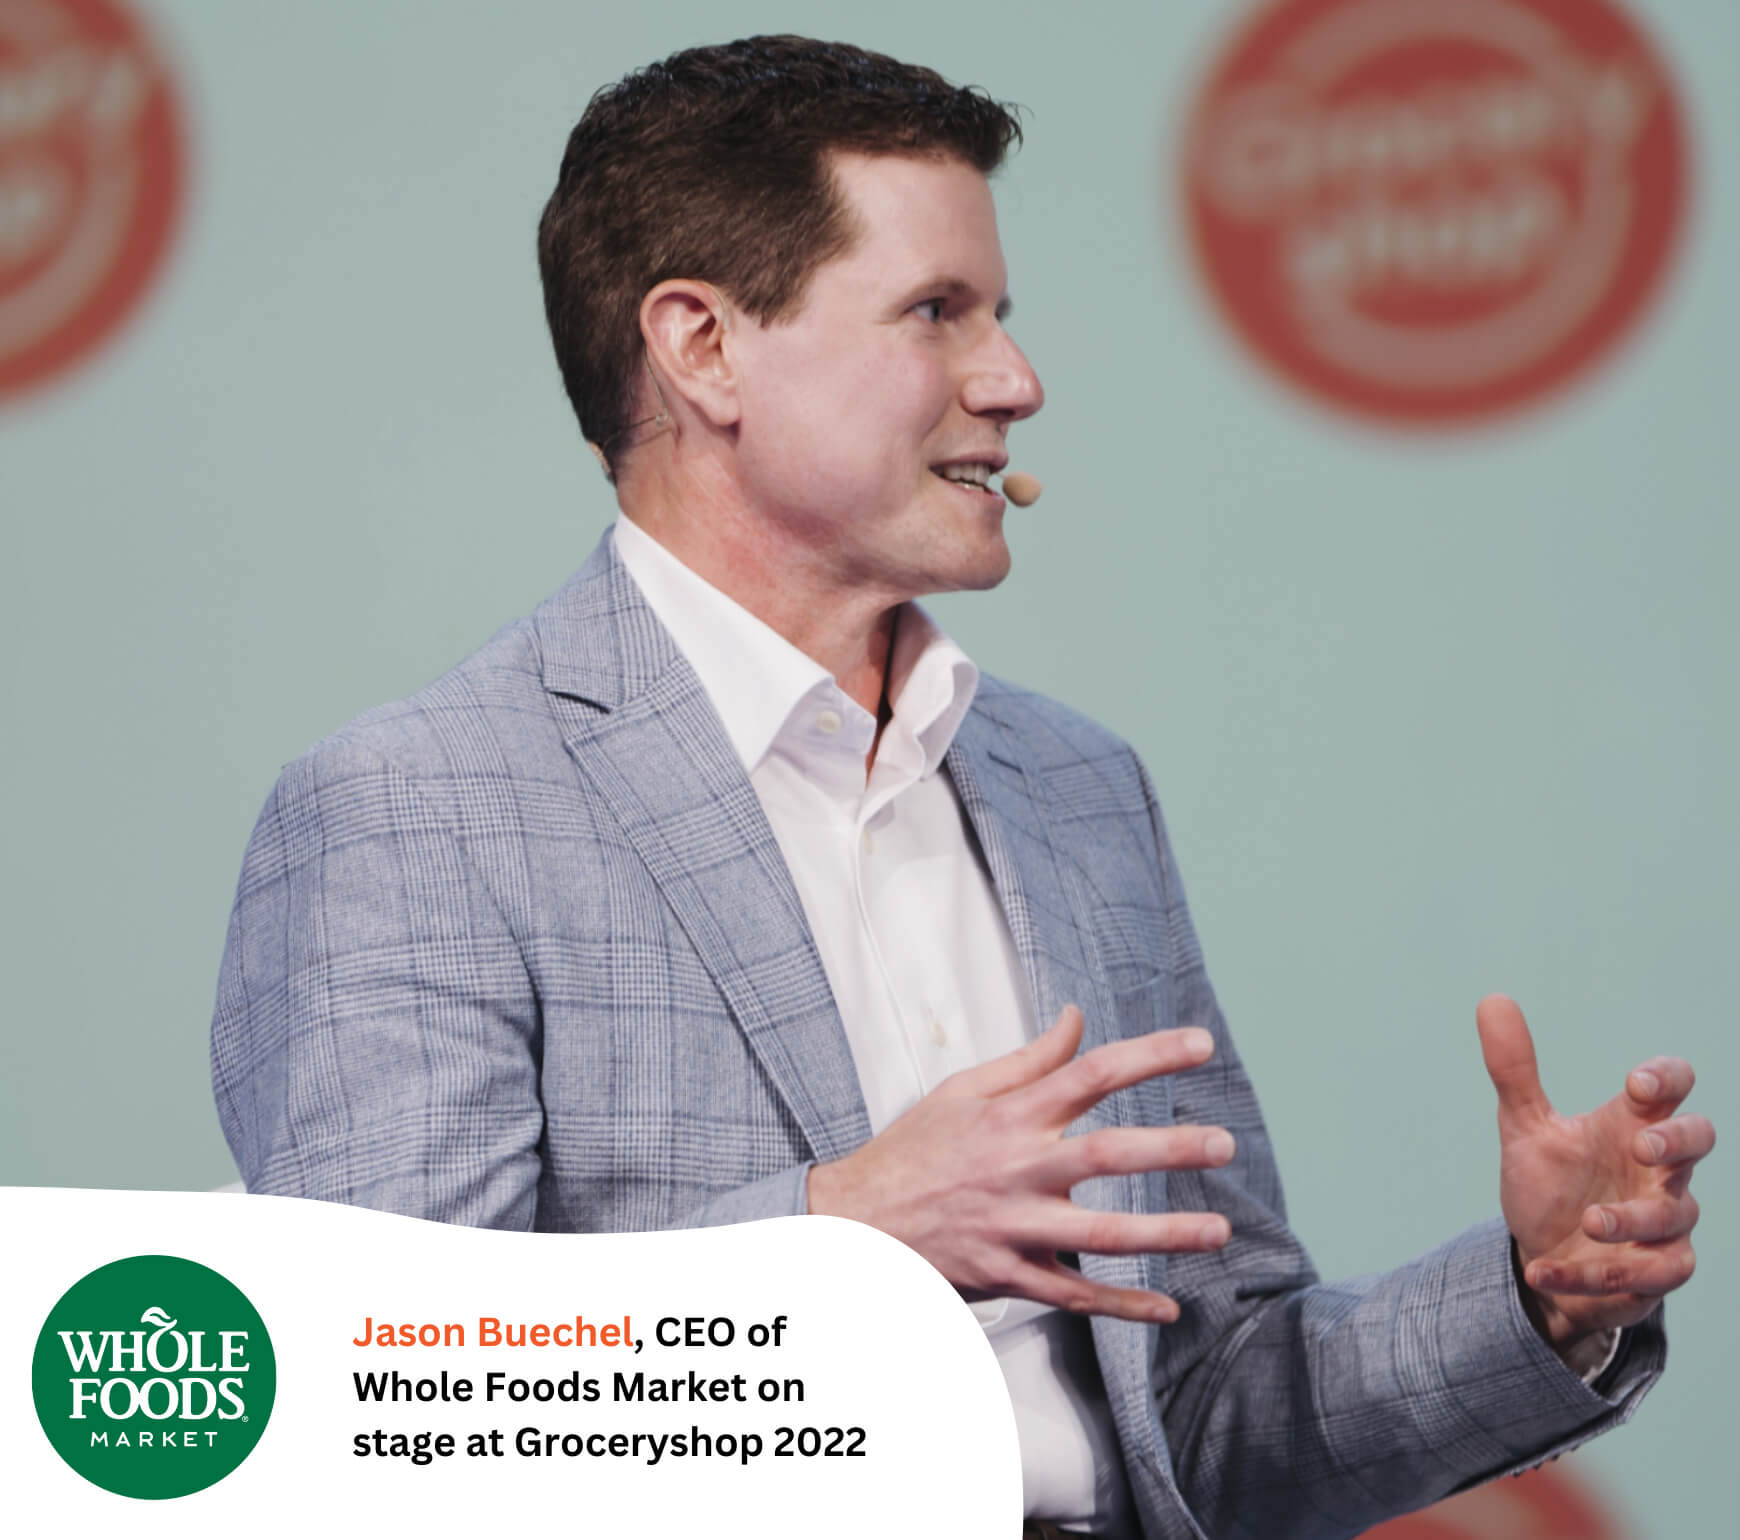 Jason Buechel, CEO, Whole Foods